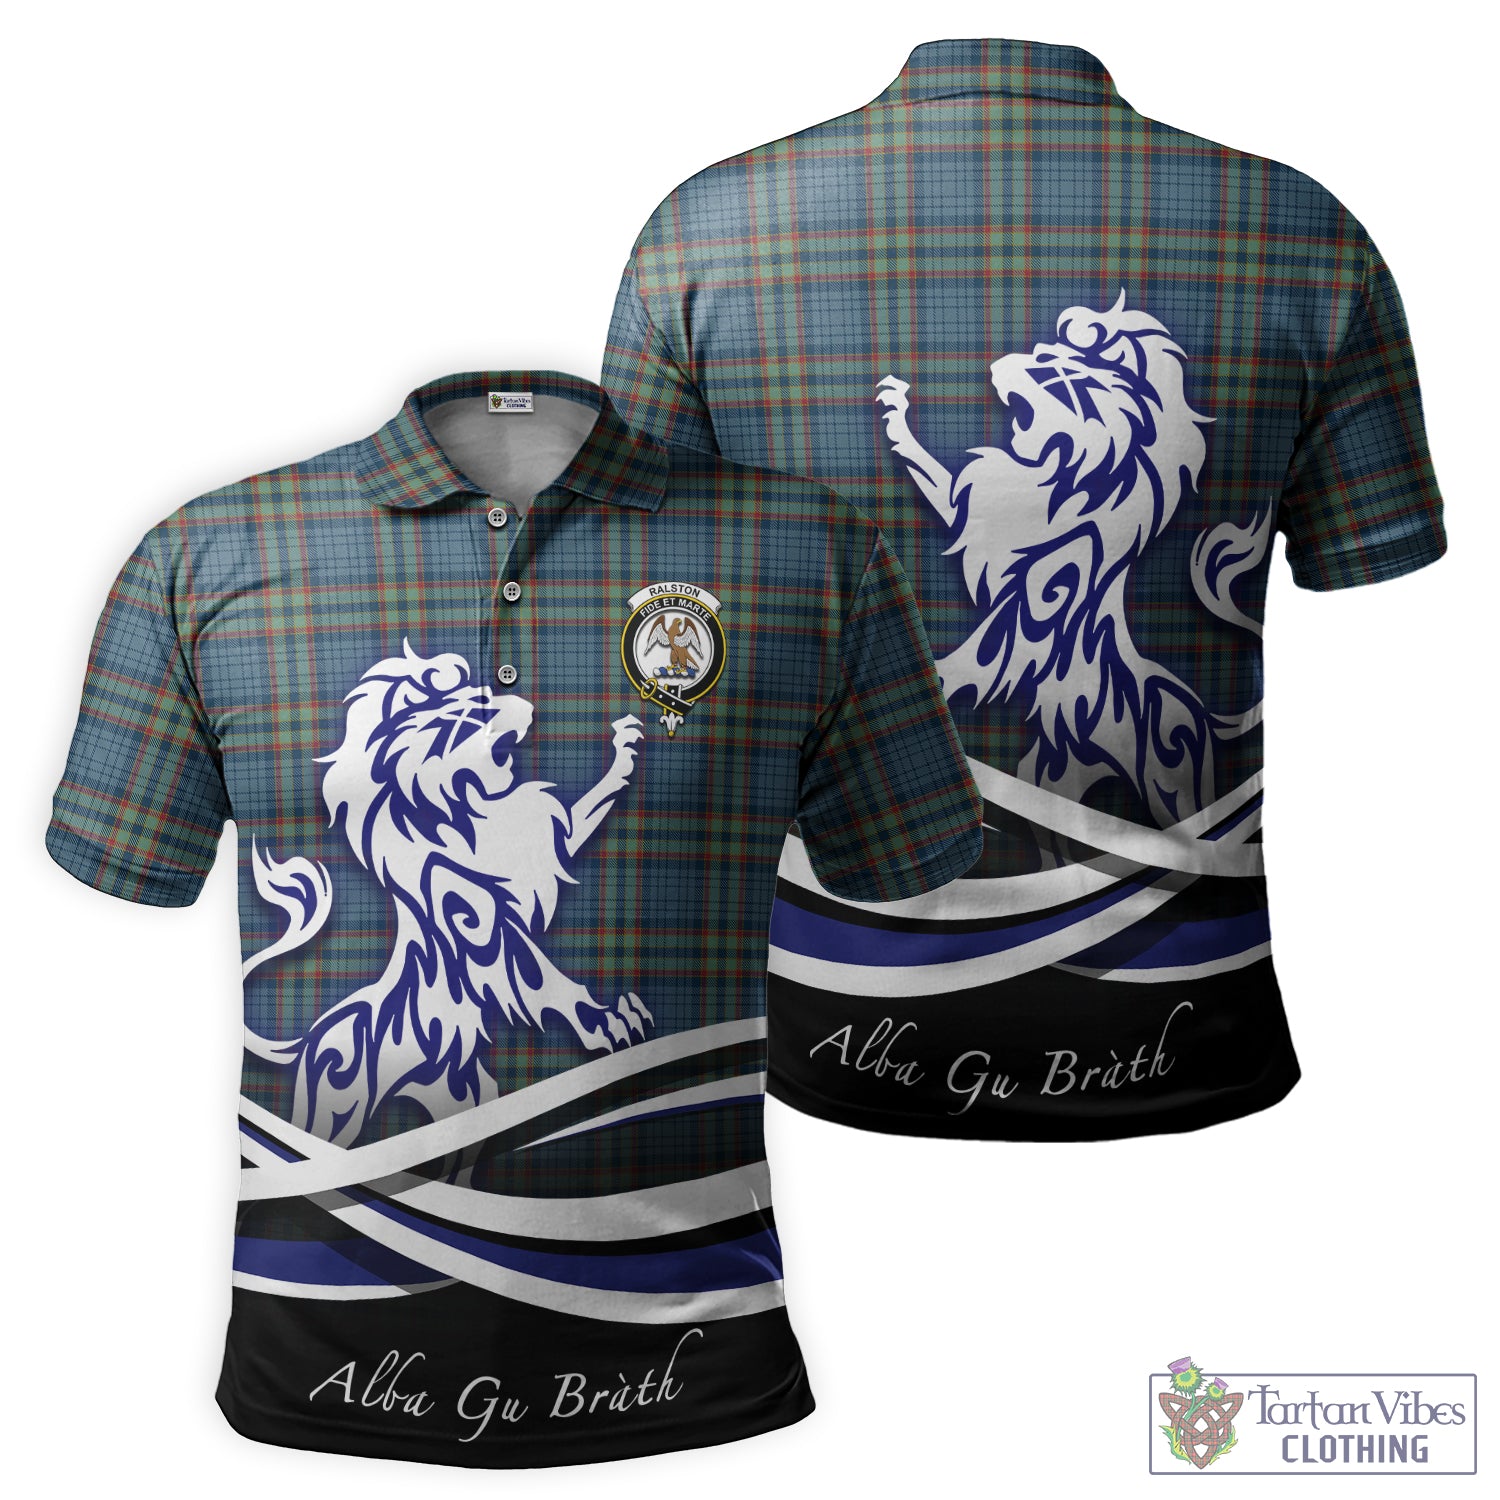 ralston-uk-tartan-polo-shirt-with-alba-gu-brath-regal-lion-emblem